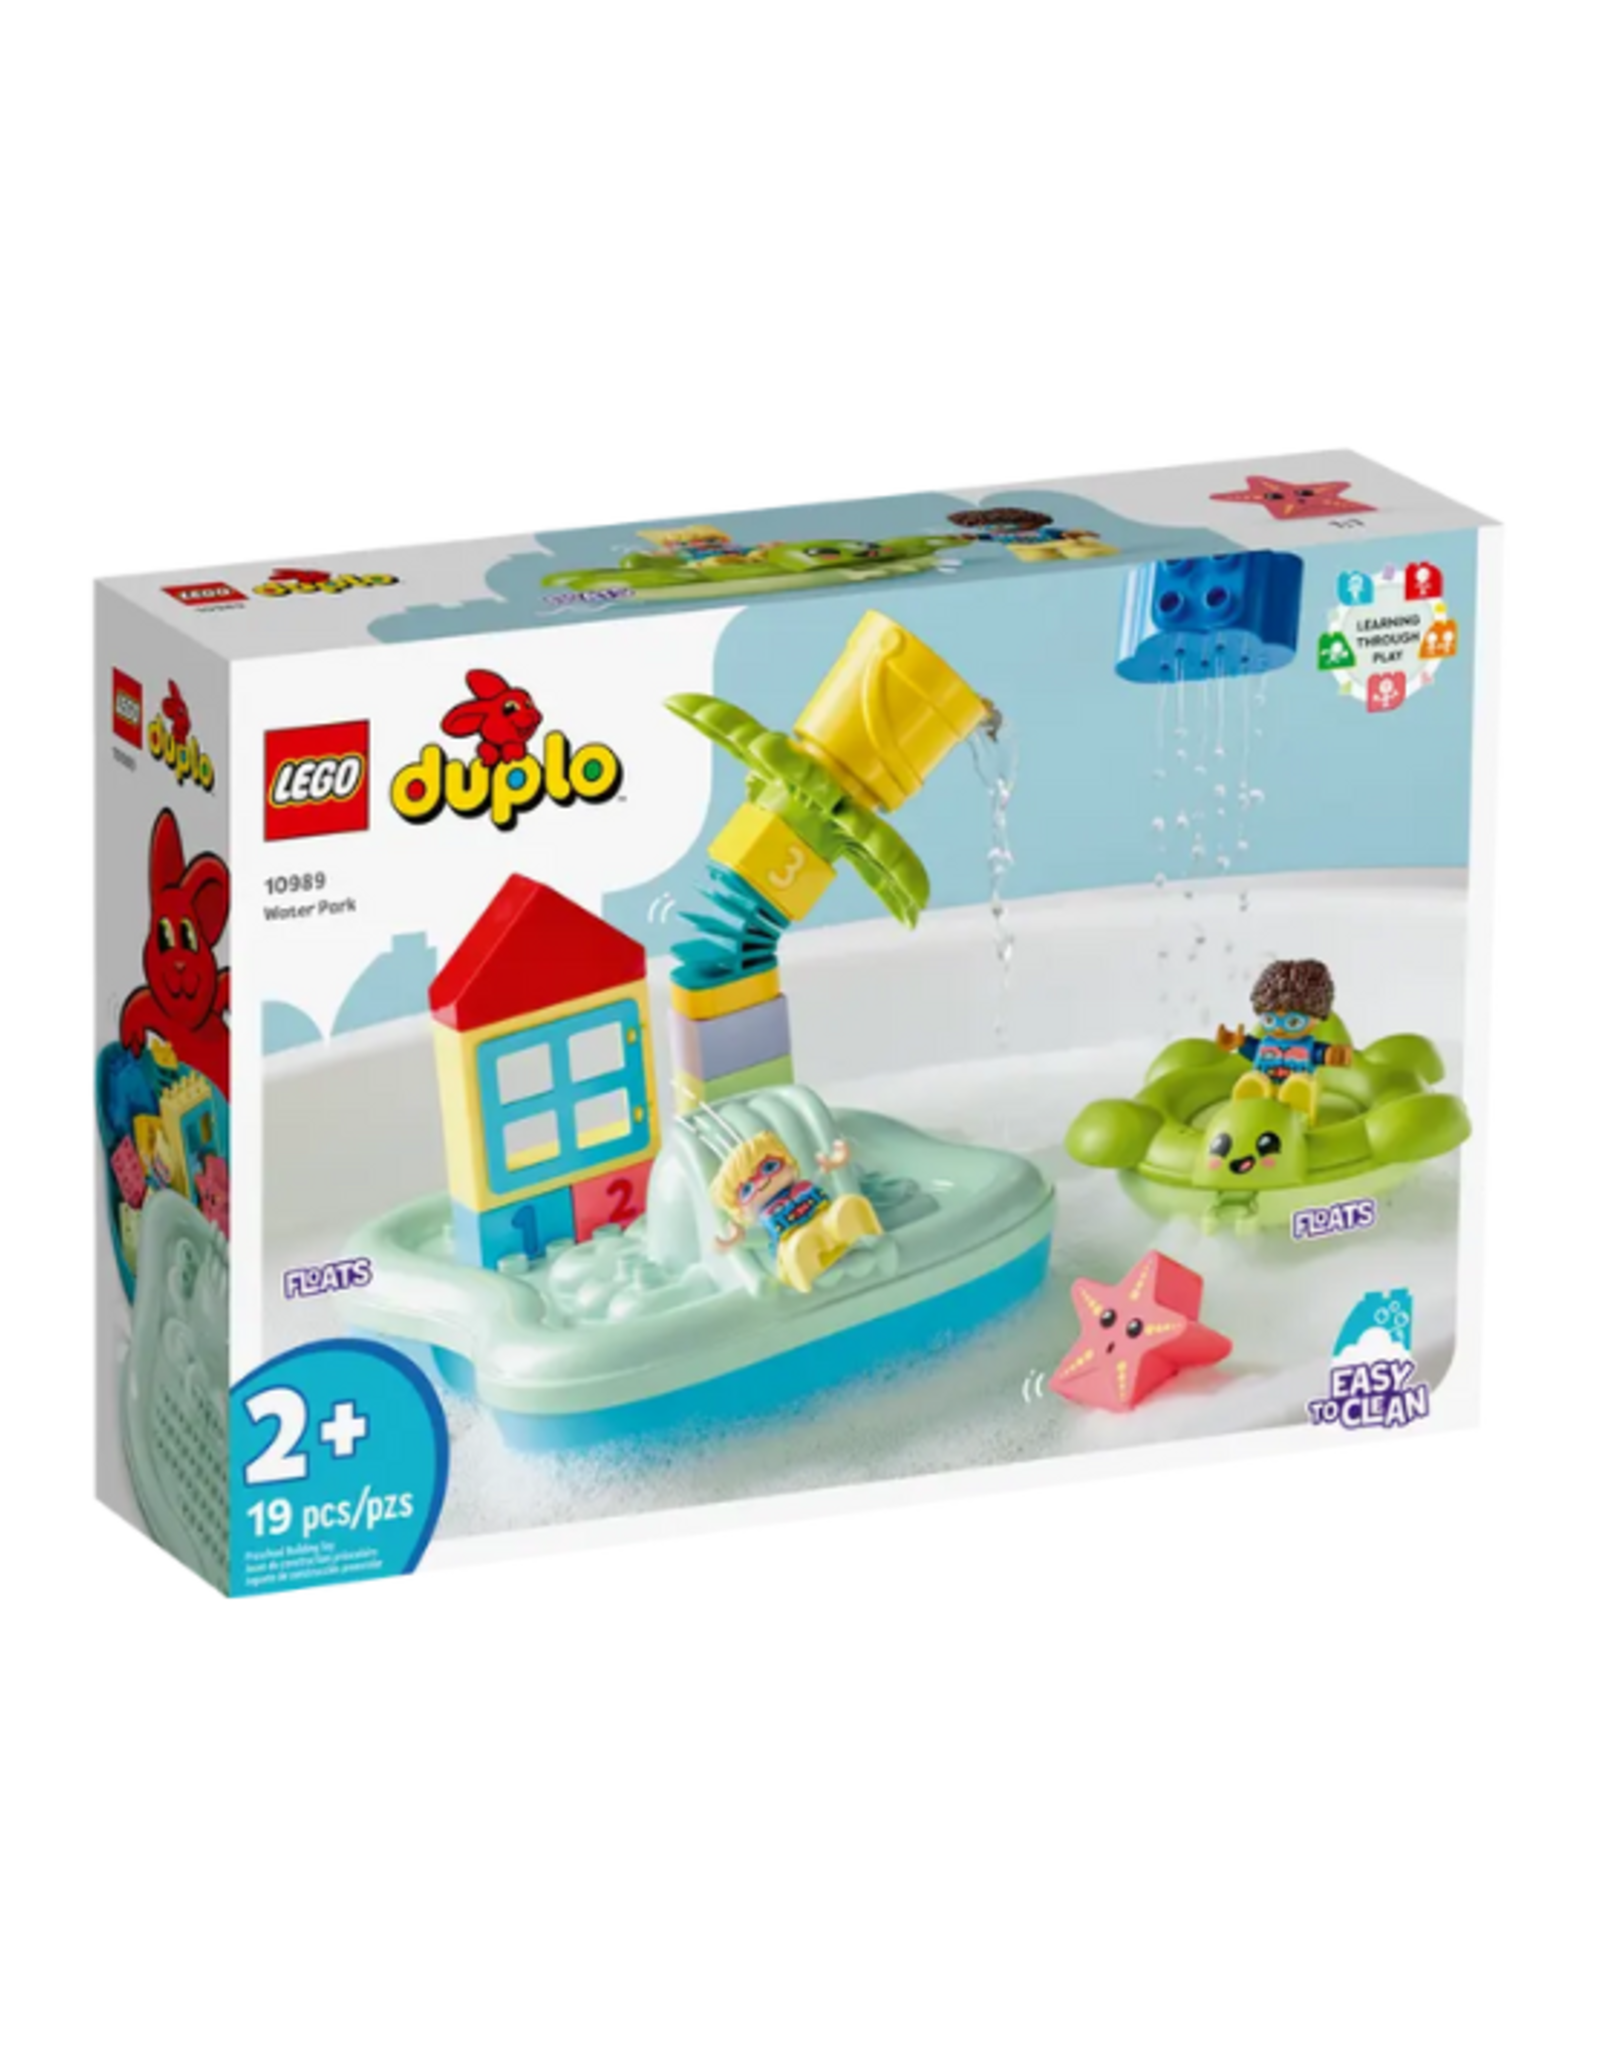 Lego Lego - Duplo - 10989 - Water Park